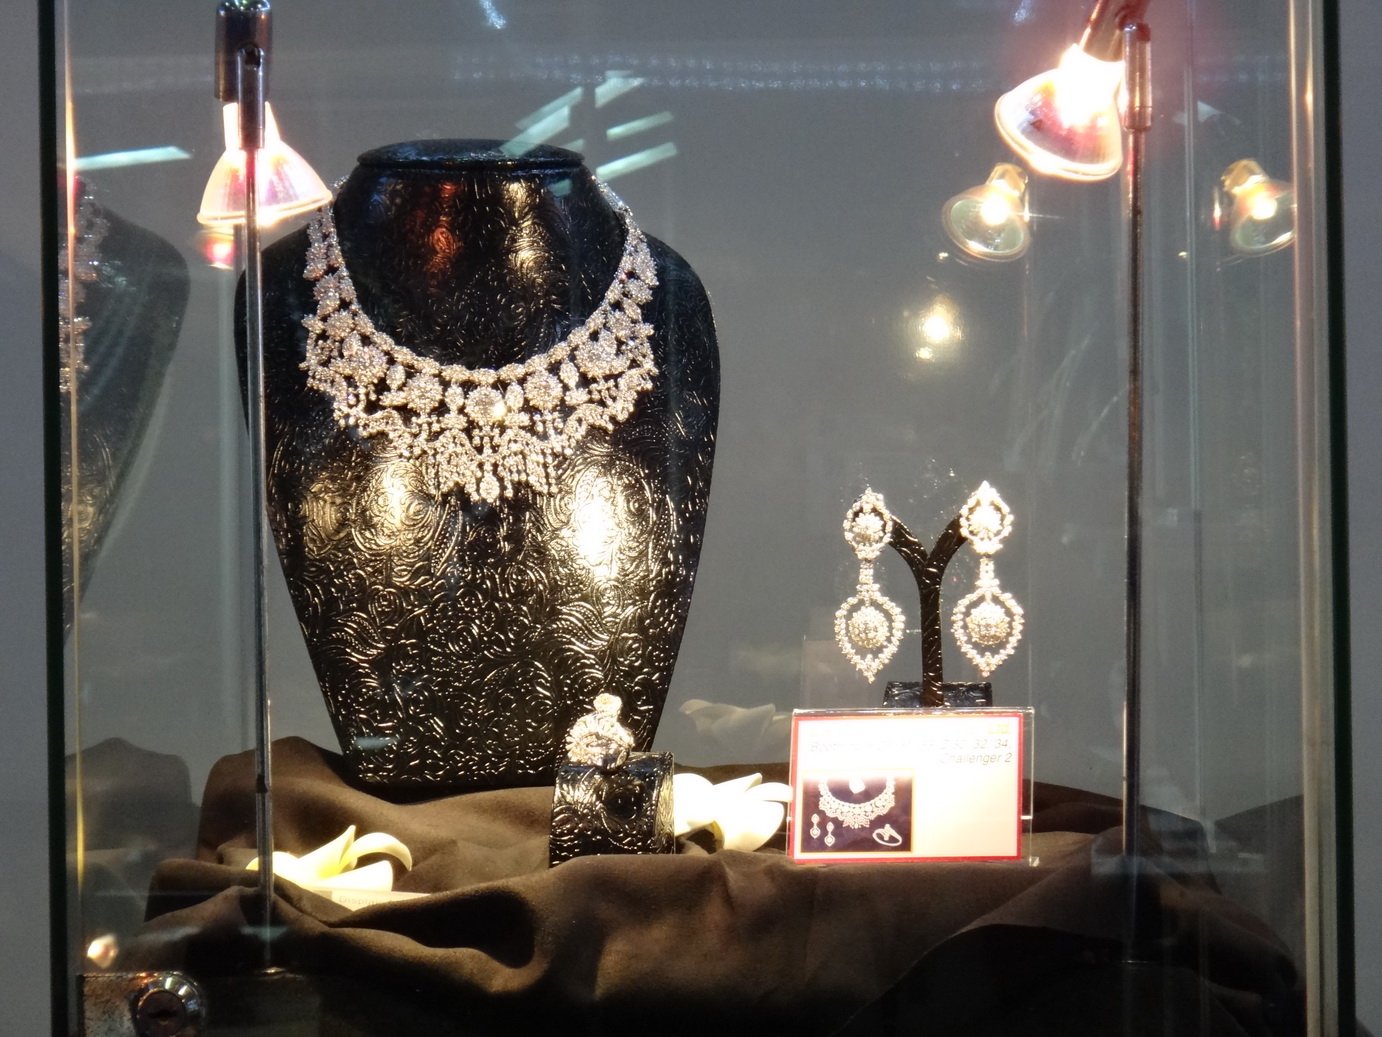 Ploi Thai Jewelry Creation Award in Bangkok Gems & Jewelry Fair ครั้งที่ 49 February 2012 By L.S. Jewelry Group